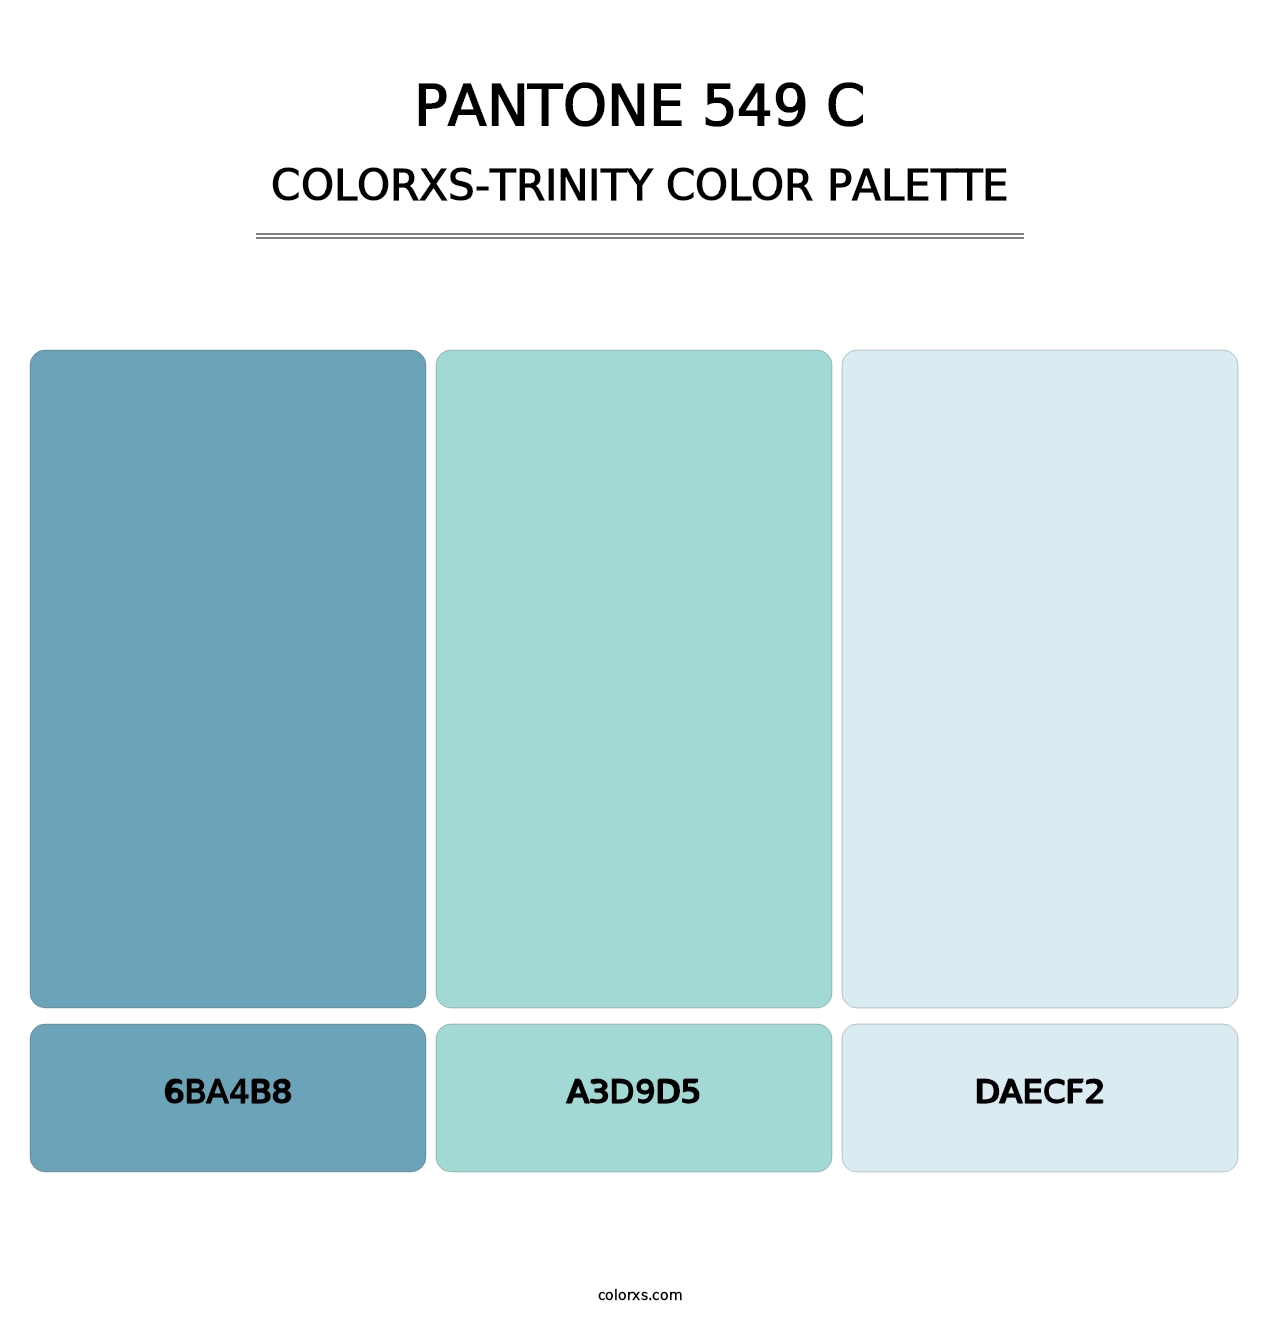 PANTONE 549 C - Colorxs Trinity Palette